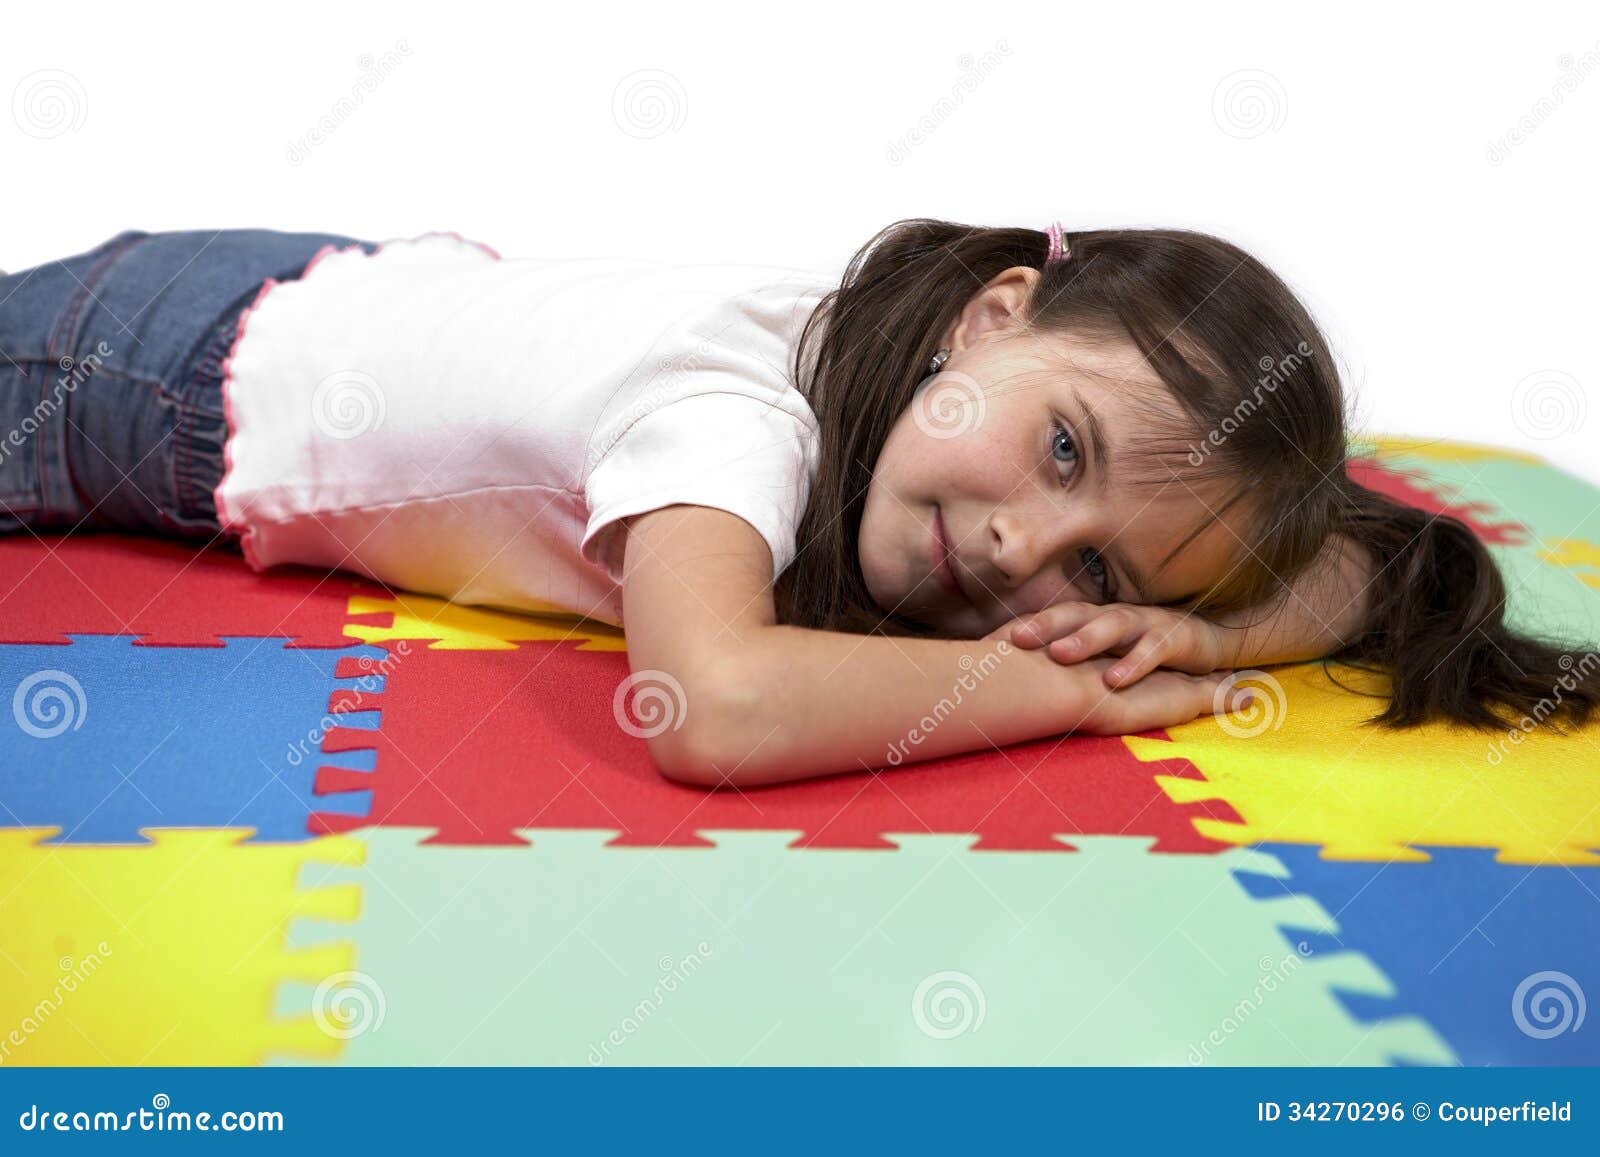 laying rubber foam carpet children play set toys studio white background 34270296